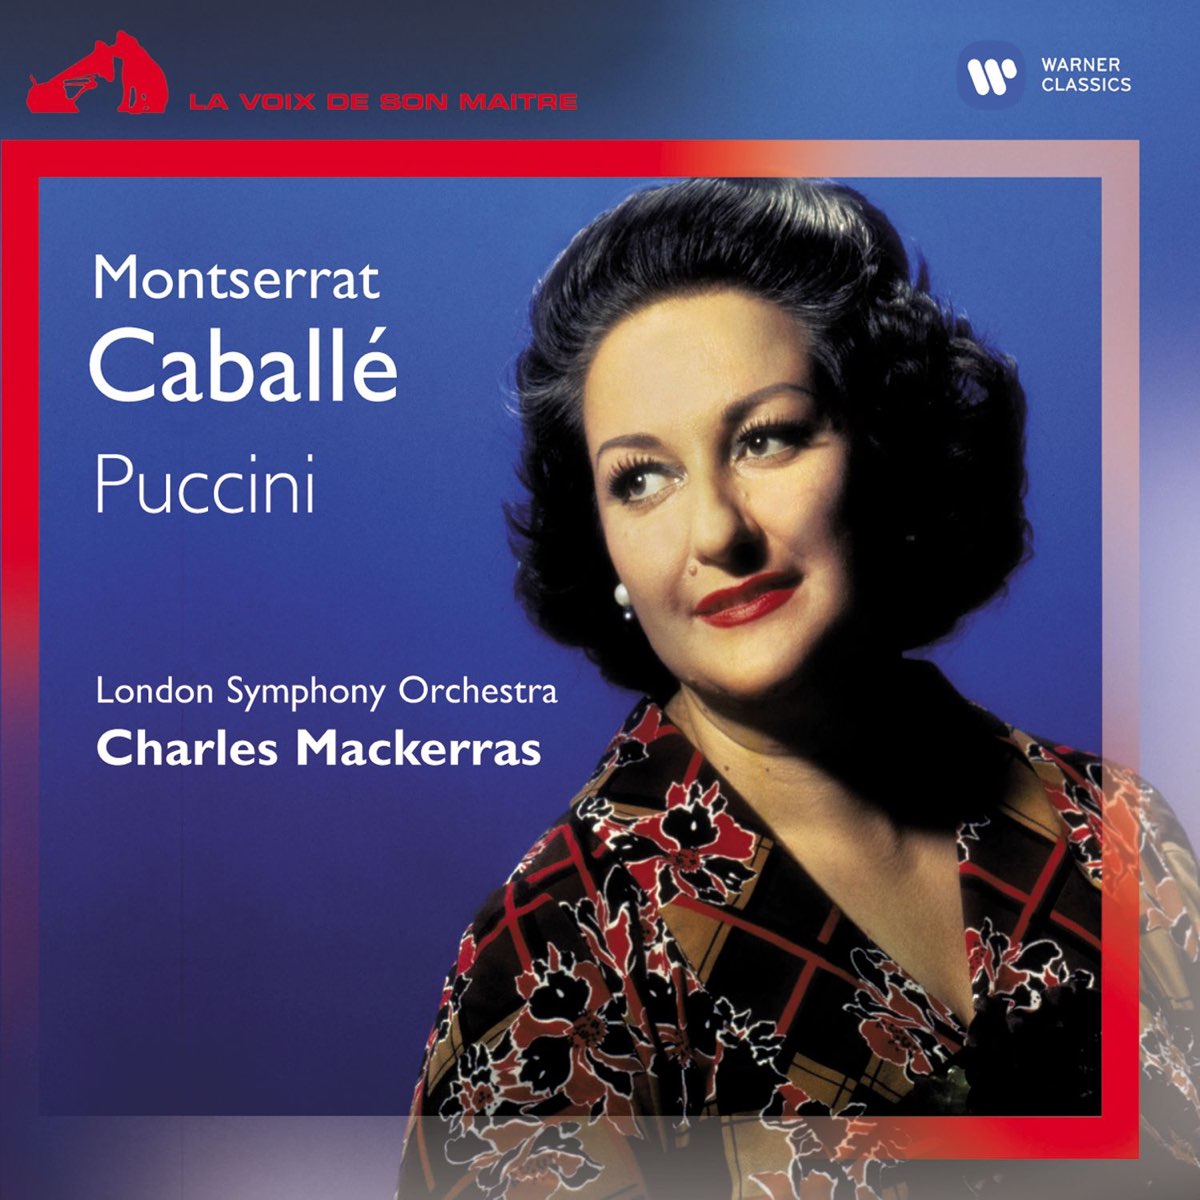 ‎Puccini: Airs d'opéras by Montserrat Caballé on Apple Music